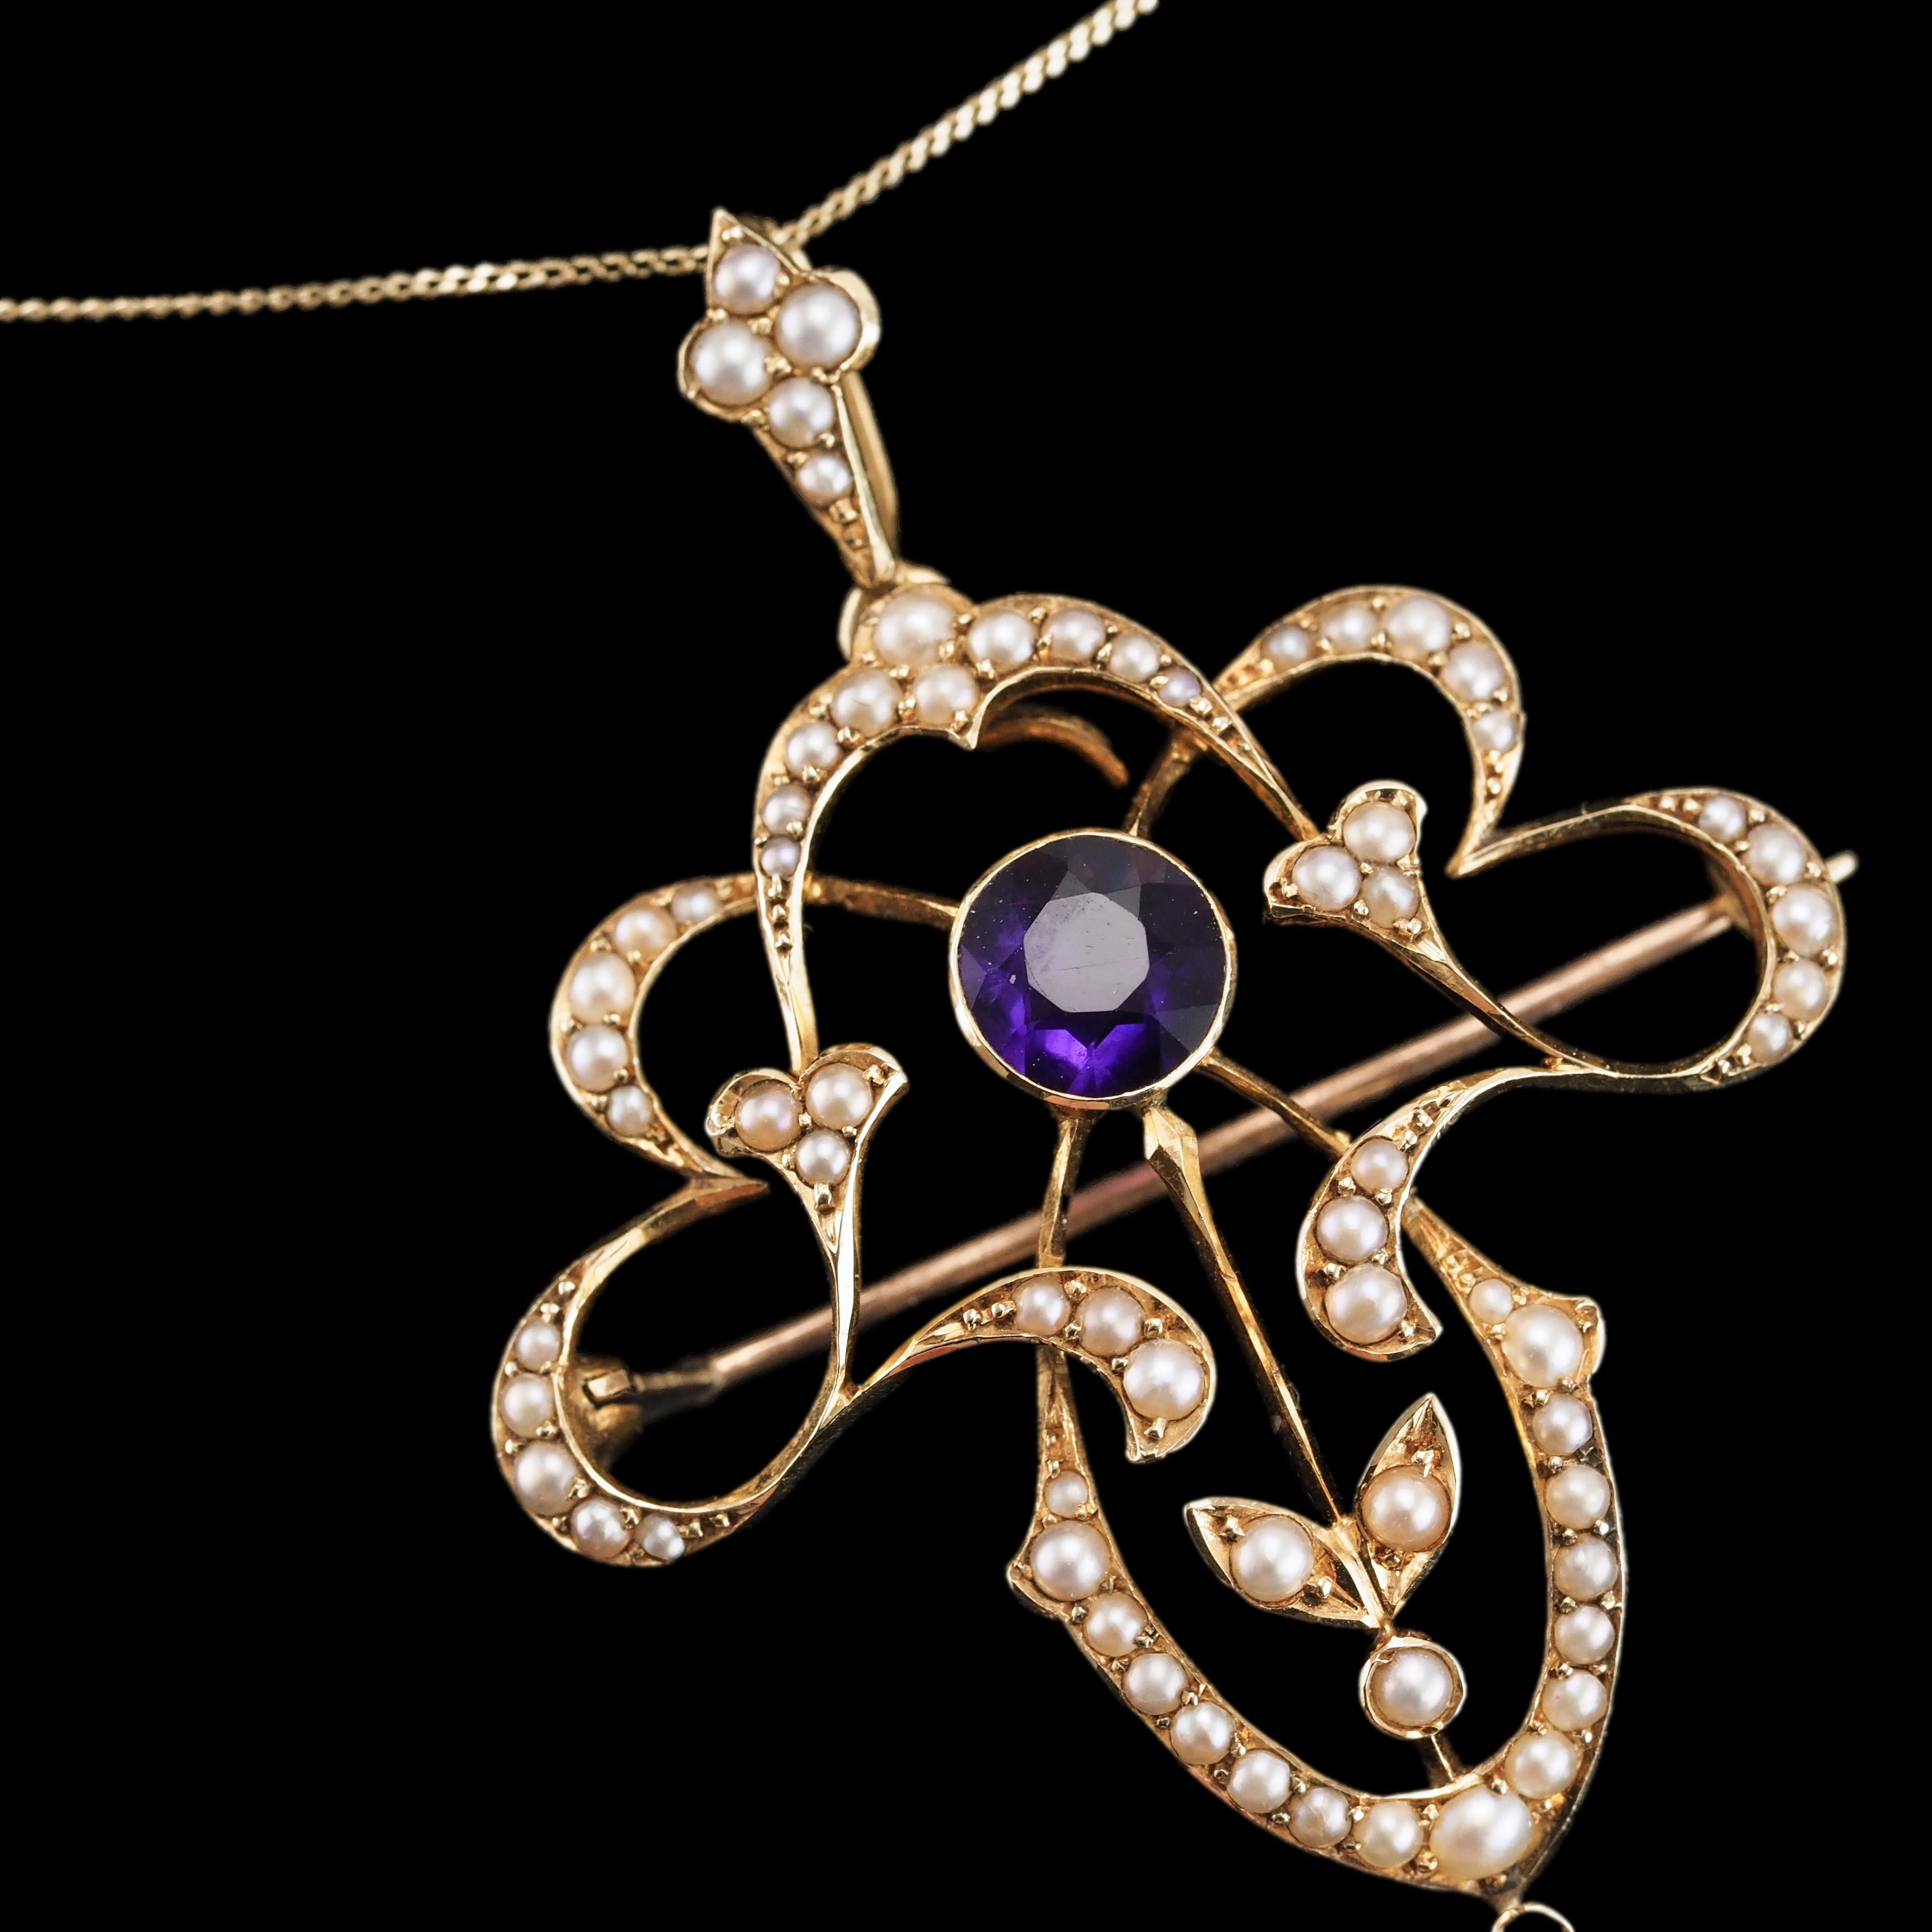 Antique Edwardian Amethyst & Seed Pearl 15K Gold Pendant Necklace Art Nouveau  For Sale 6